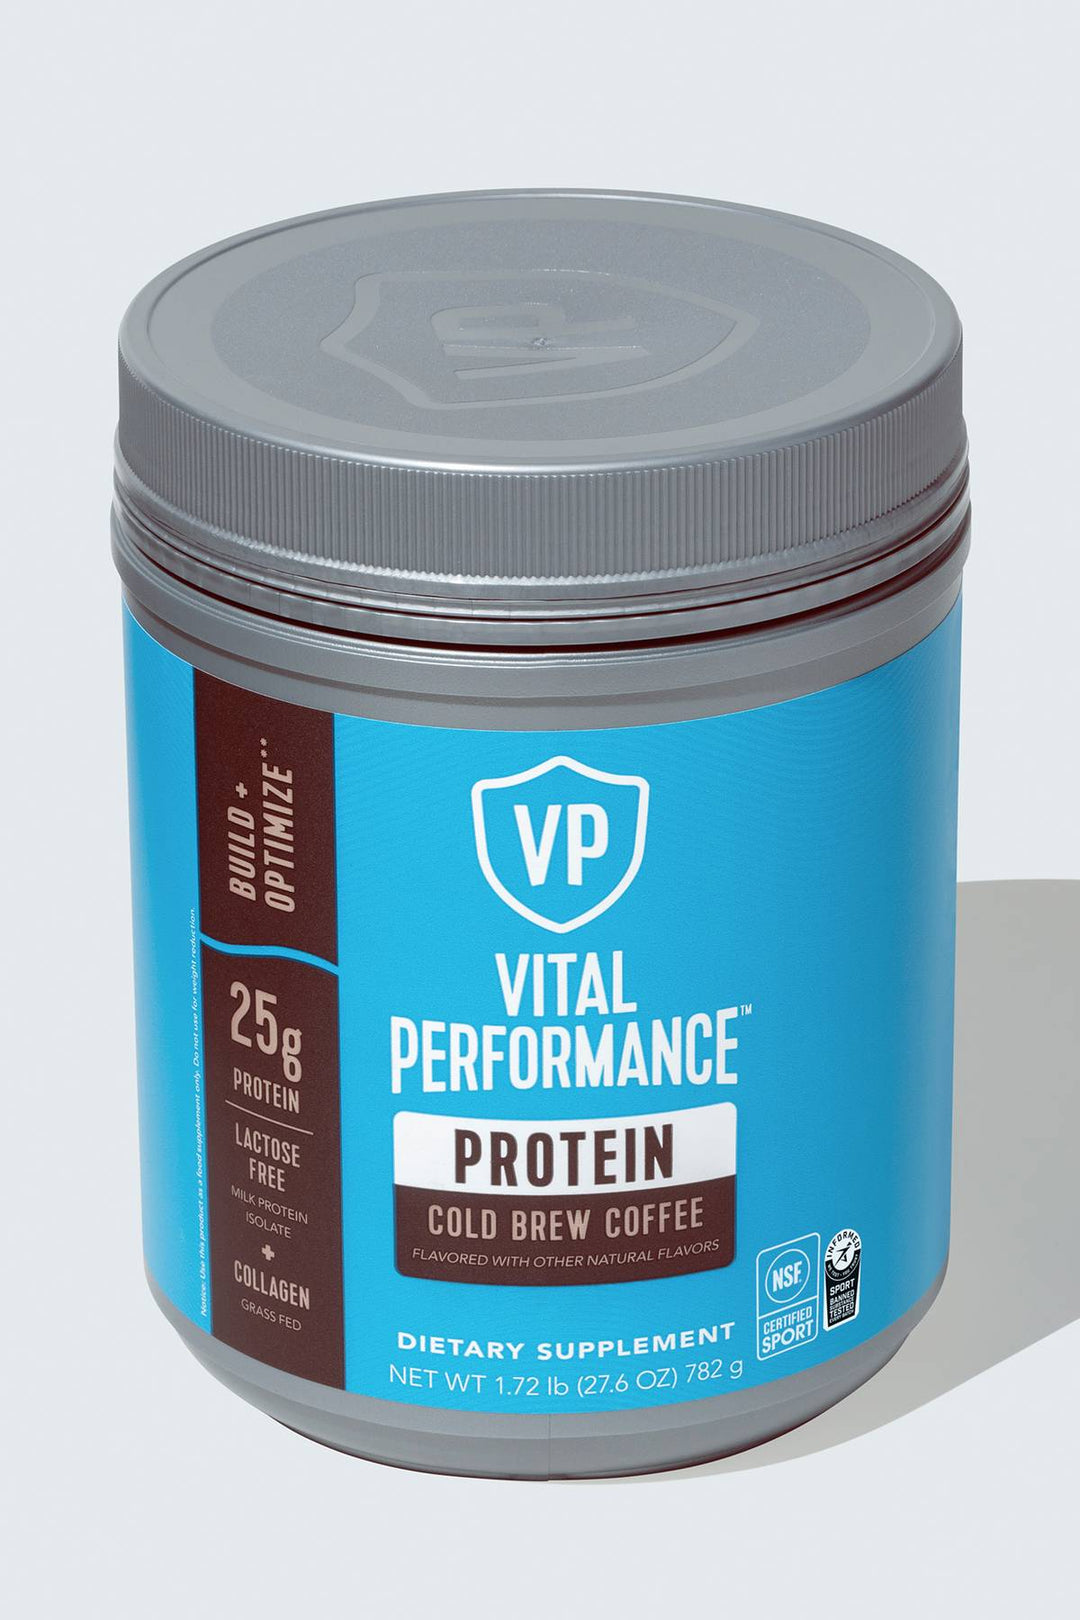 Vital Performance Protein Cold Brew Coffee 27.6oz